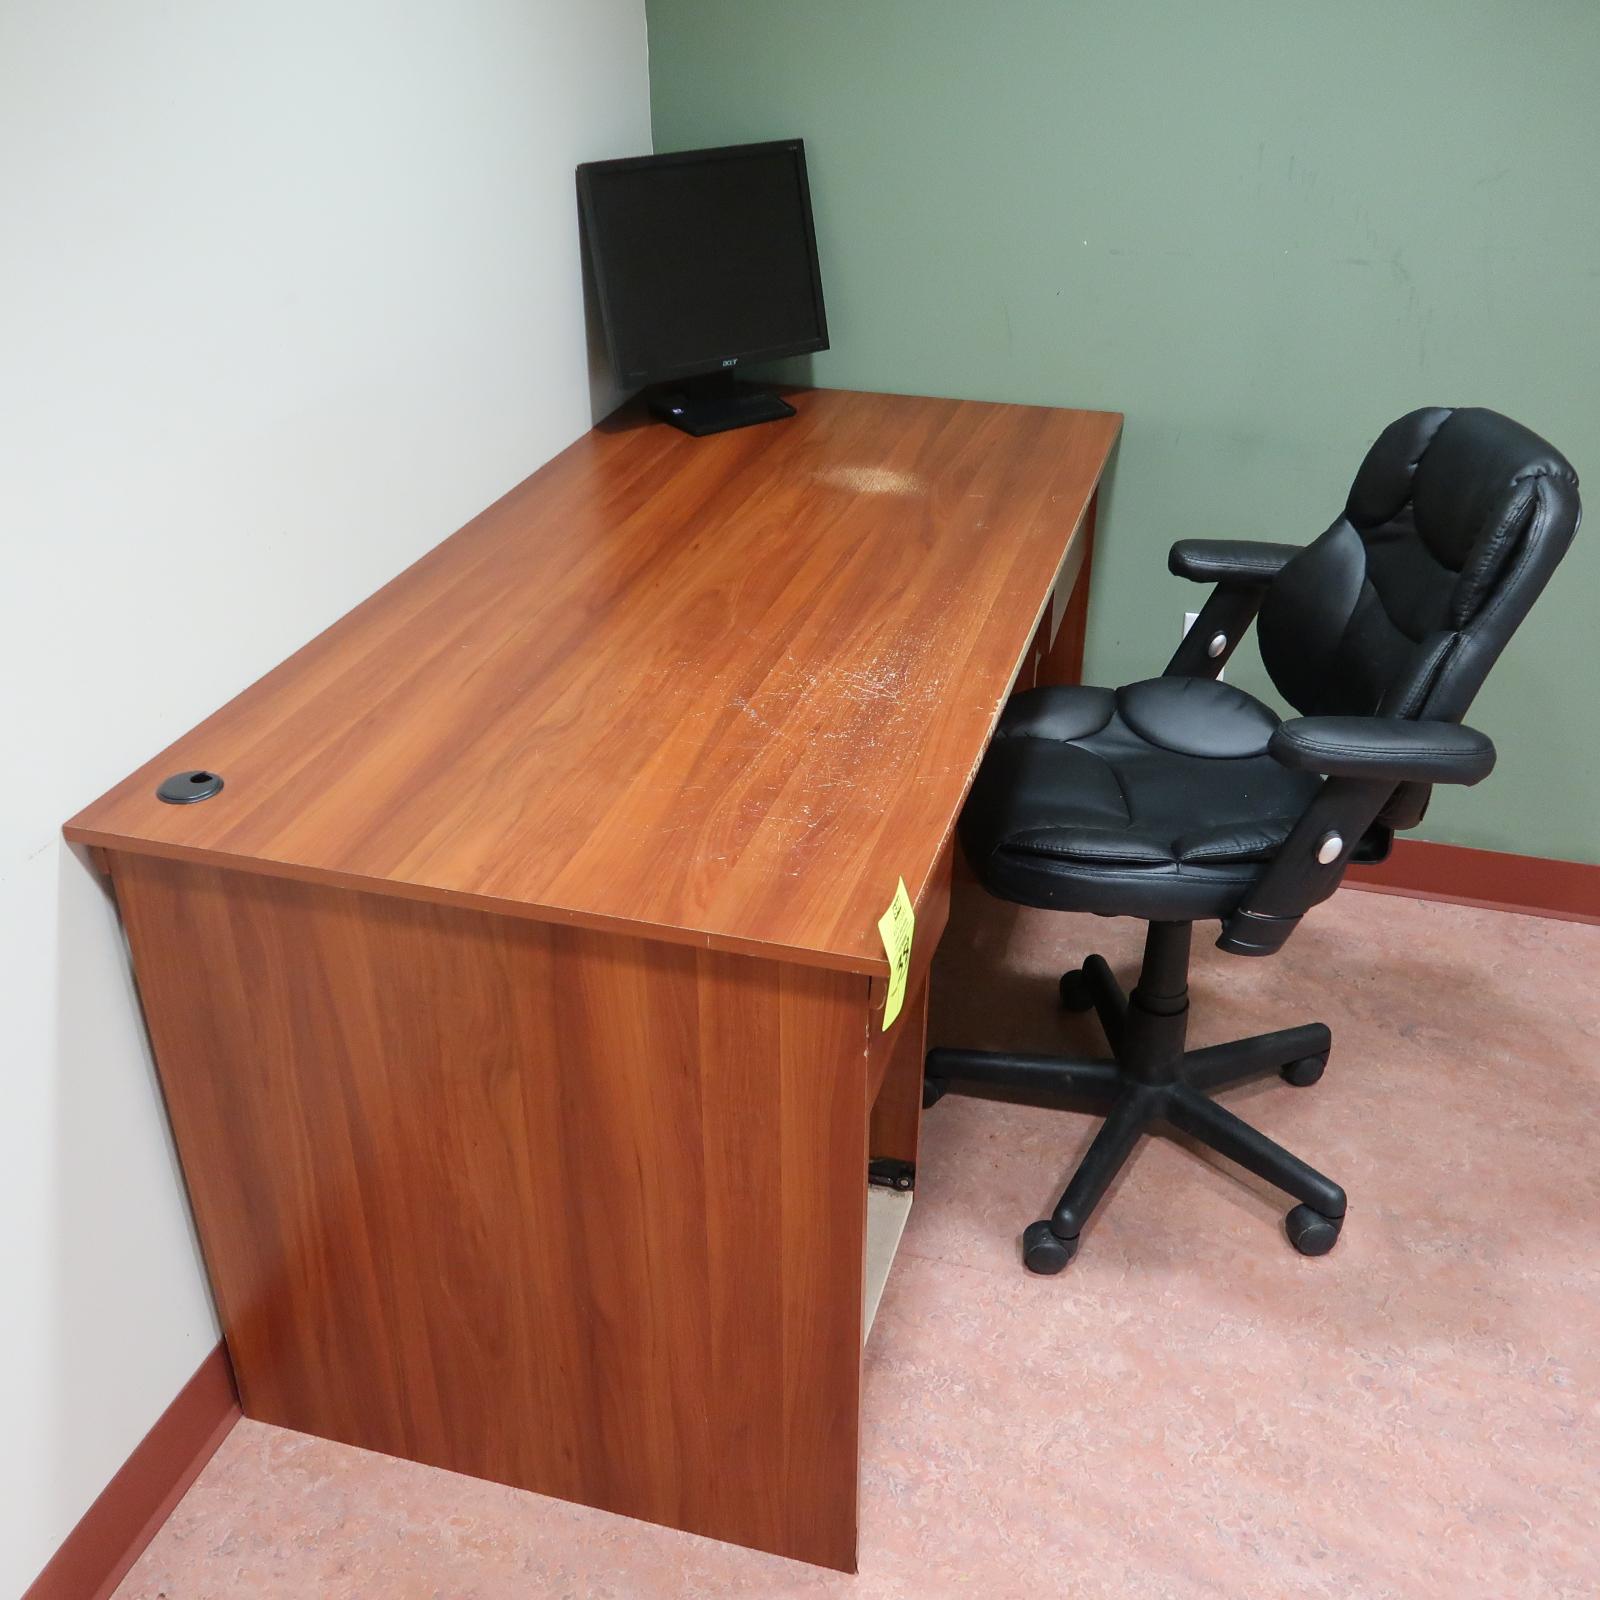 desk, chair, & monitor